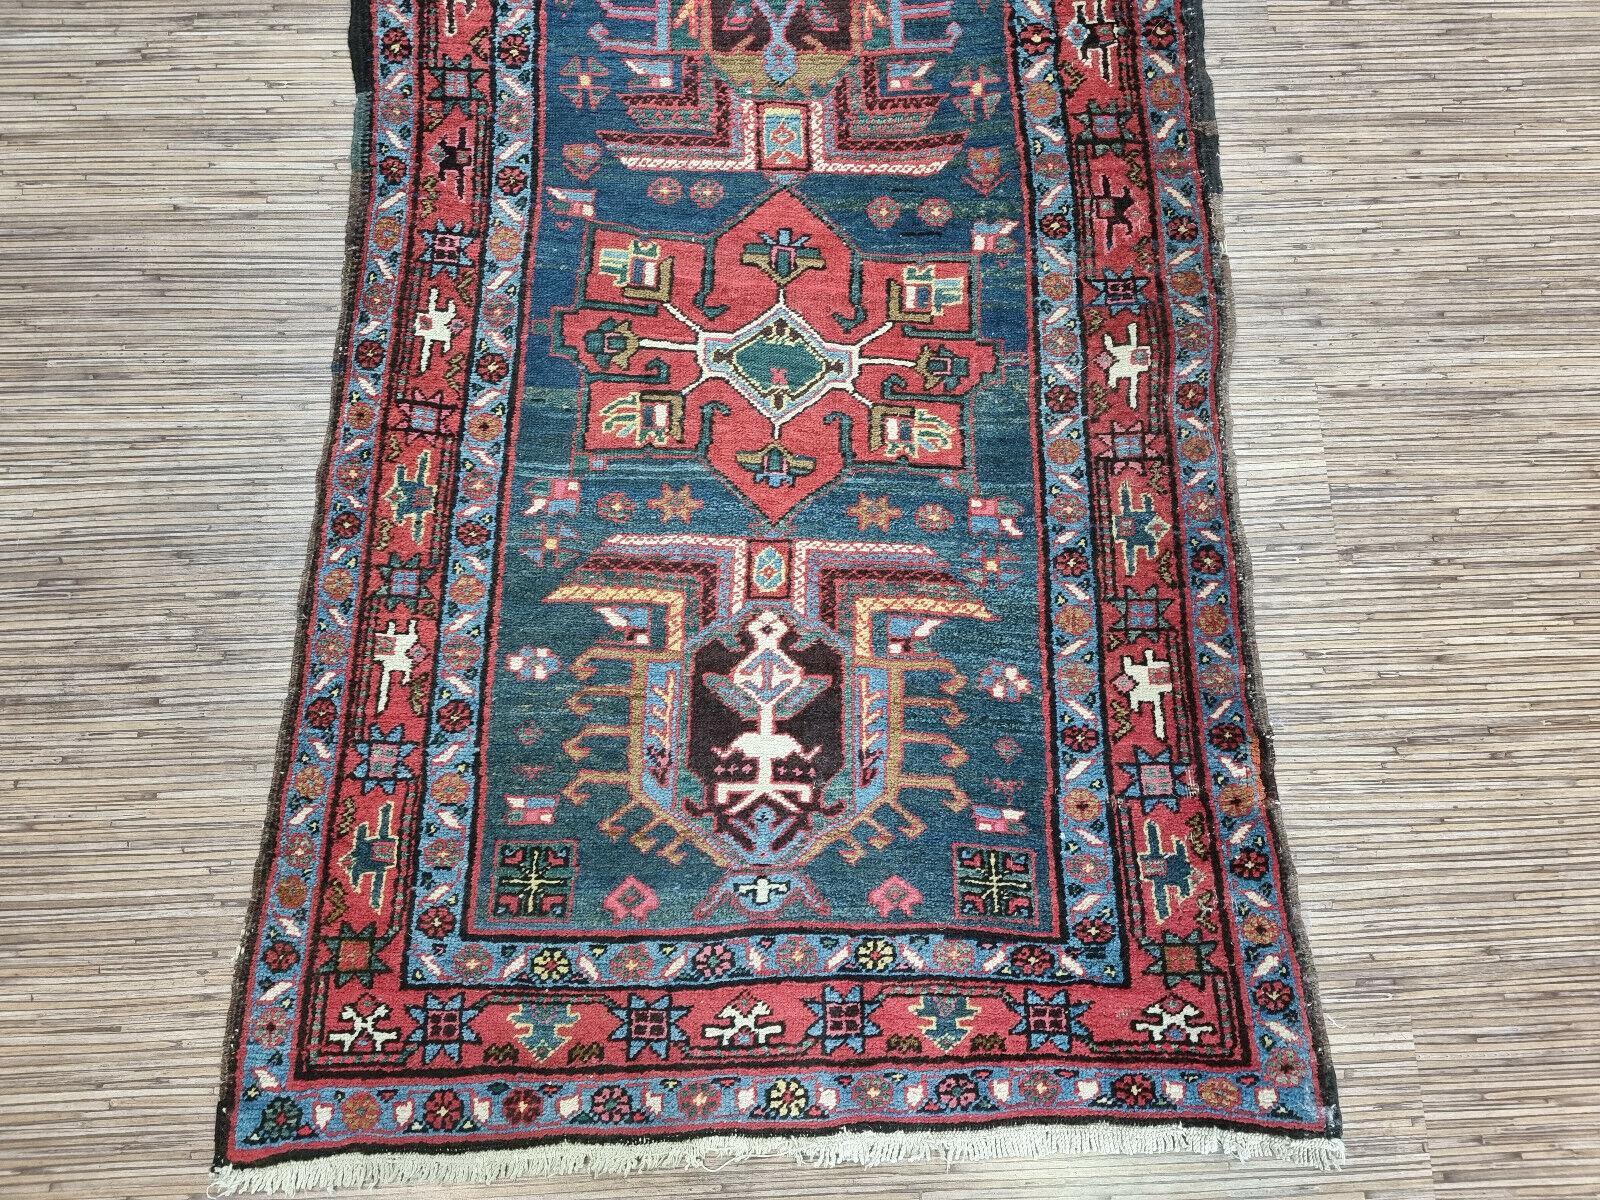 Handmade Antique Persian Style Heriz Runner Rug 2.8' x 13.7', 1900s - 1D80 1